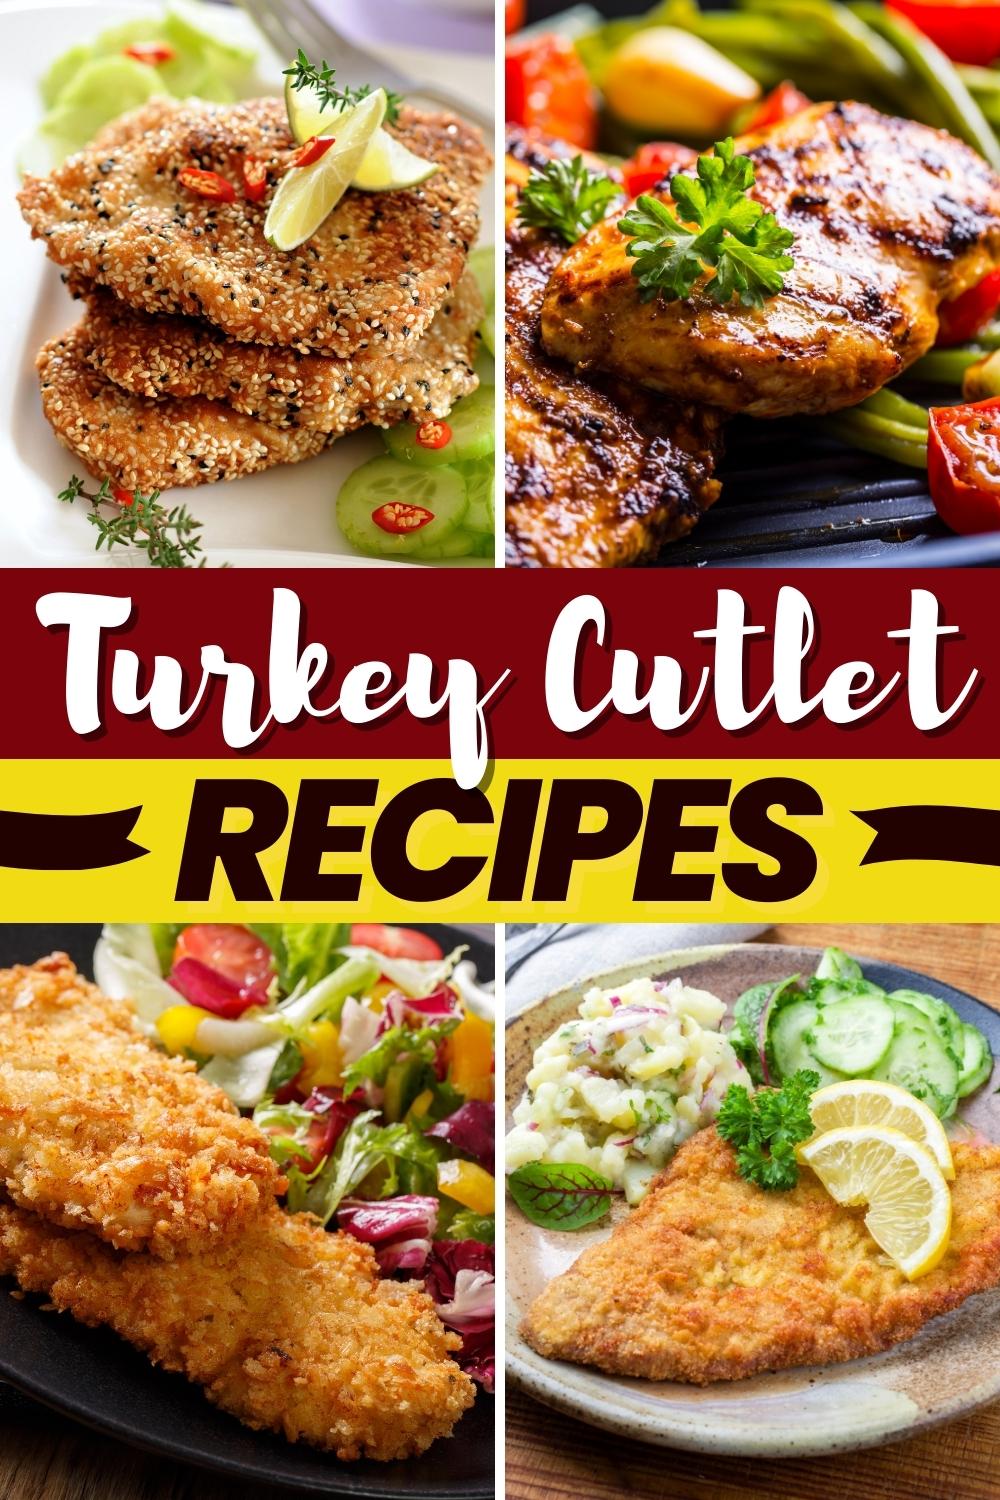 Turkey Cutlet Recipes